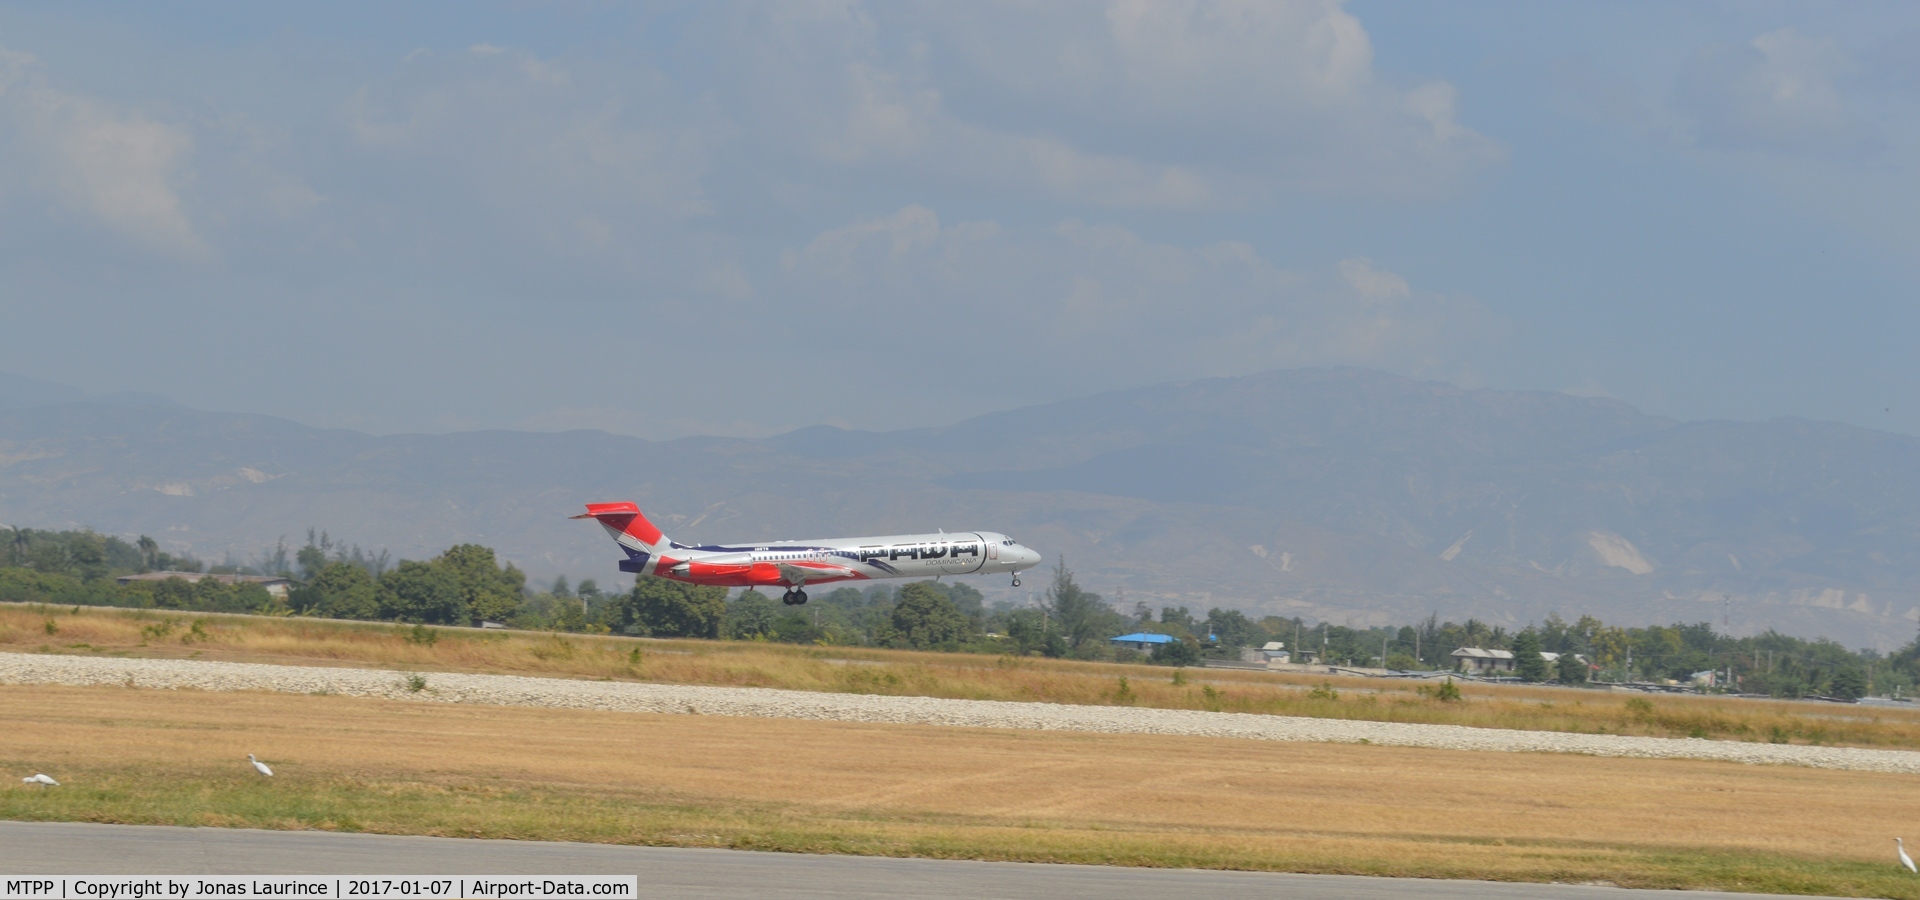 Port-au-Prince International Airport (Toussaint Louverture Int'l), Port-au-Prince Haiti (MTPP) - Aircraft PAWA Dominicana take off